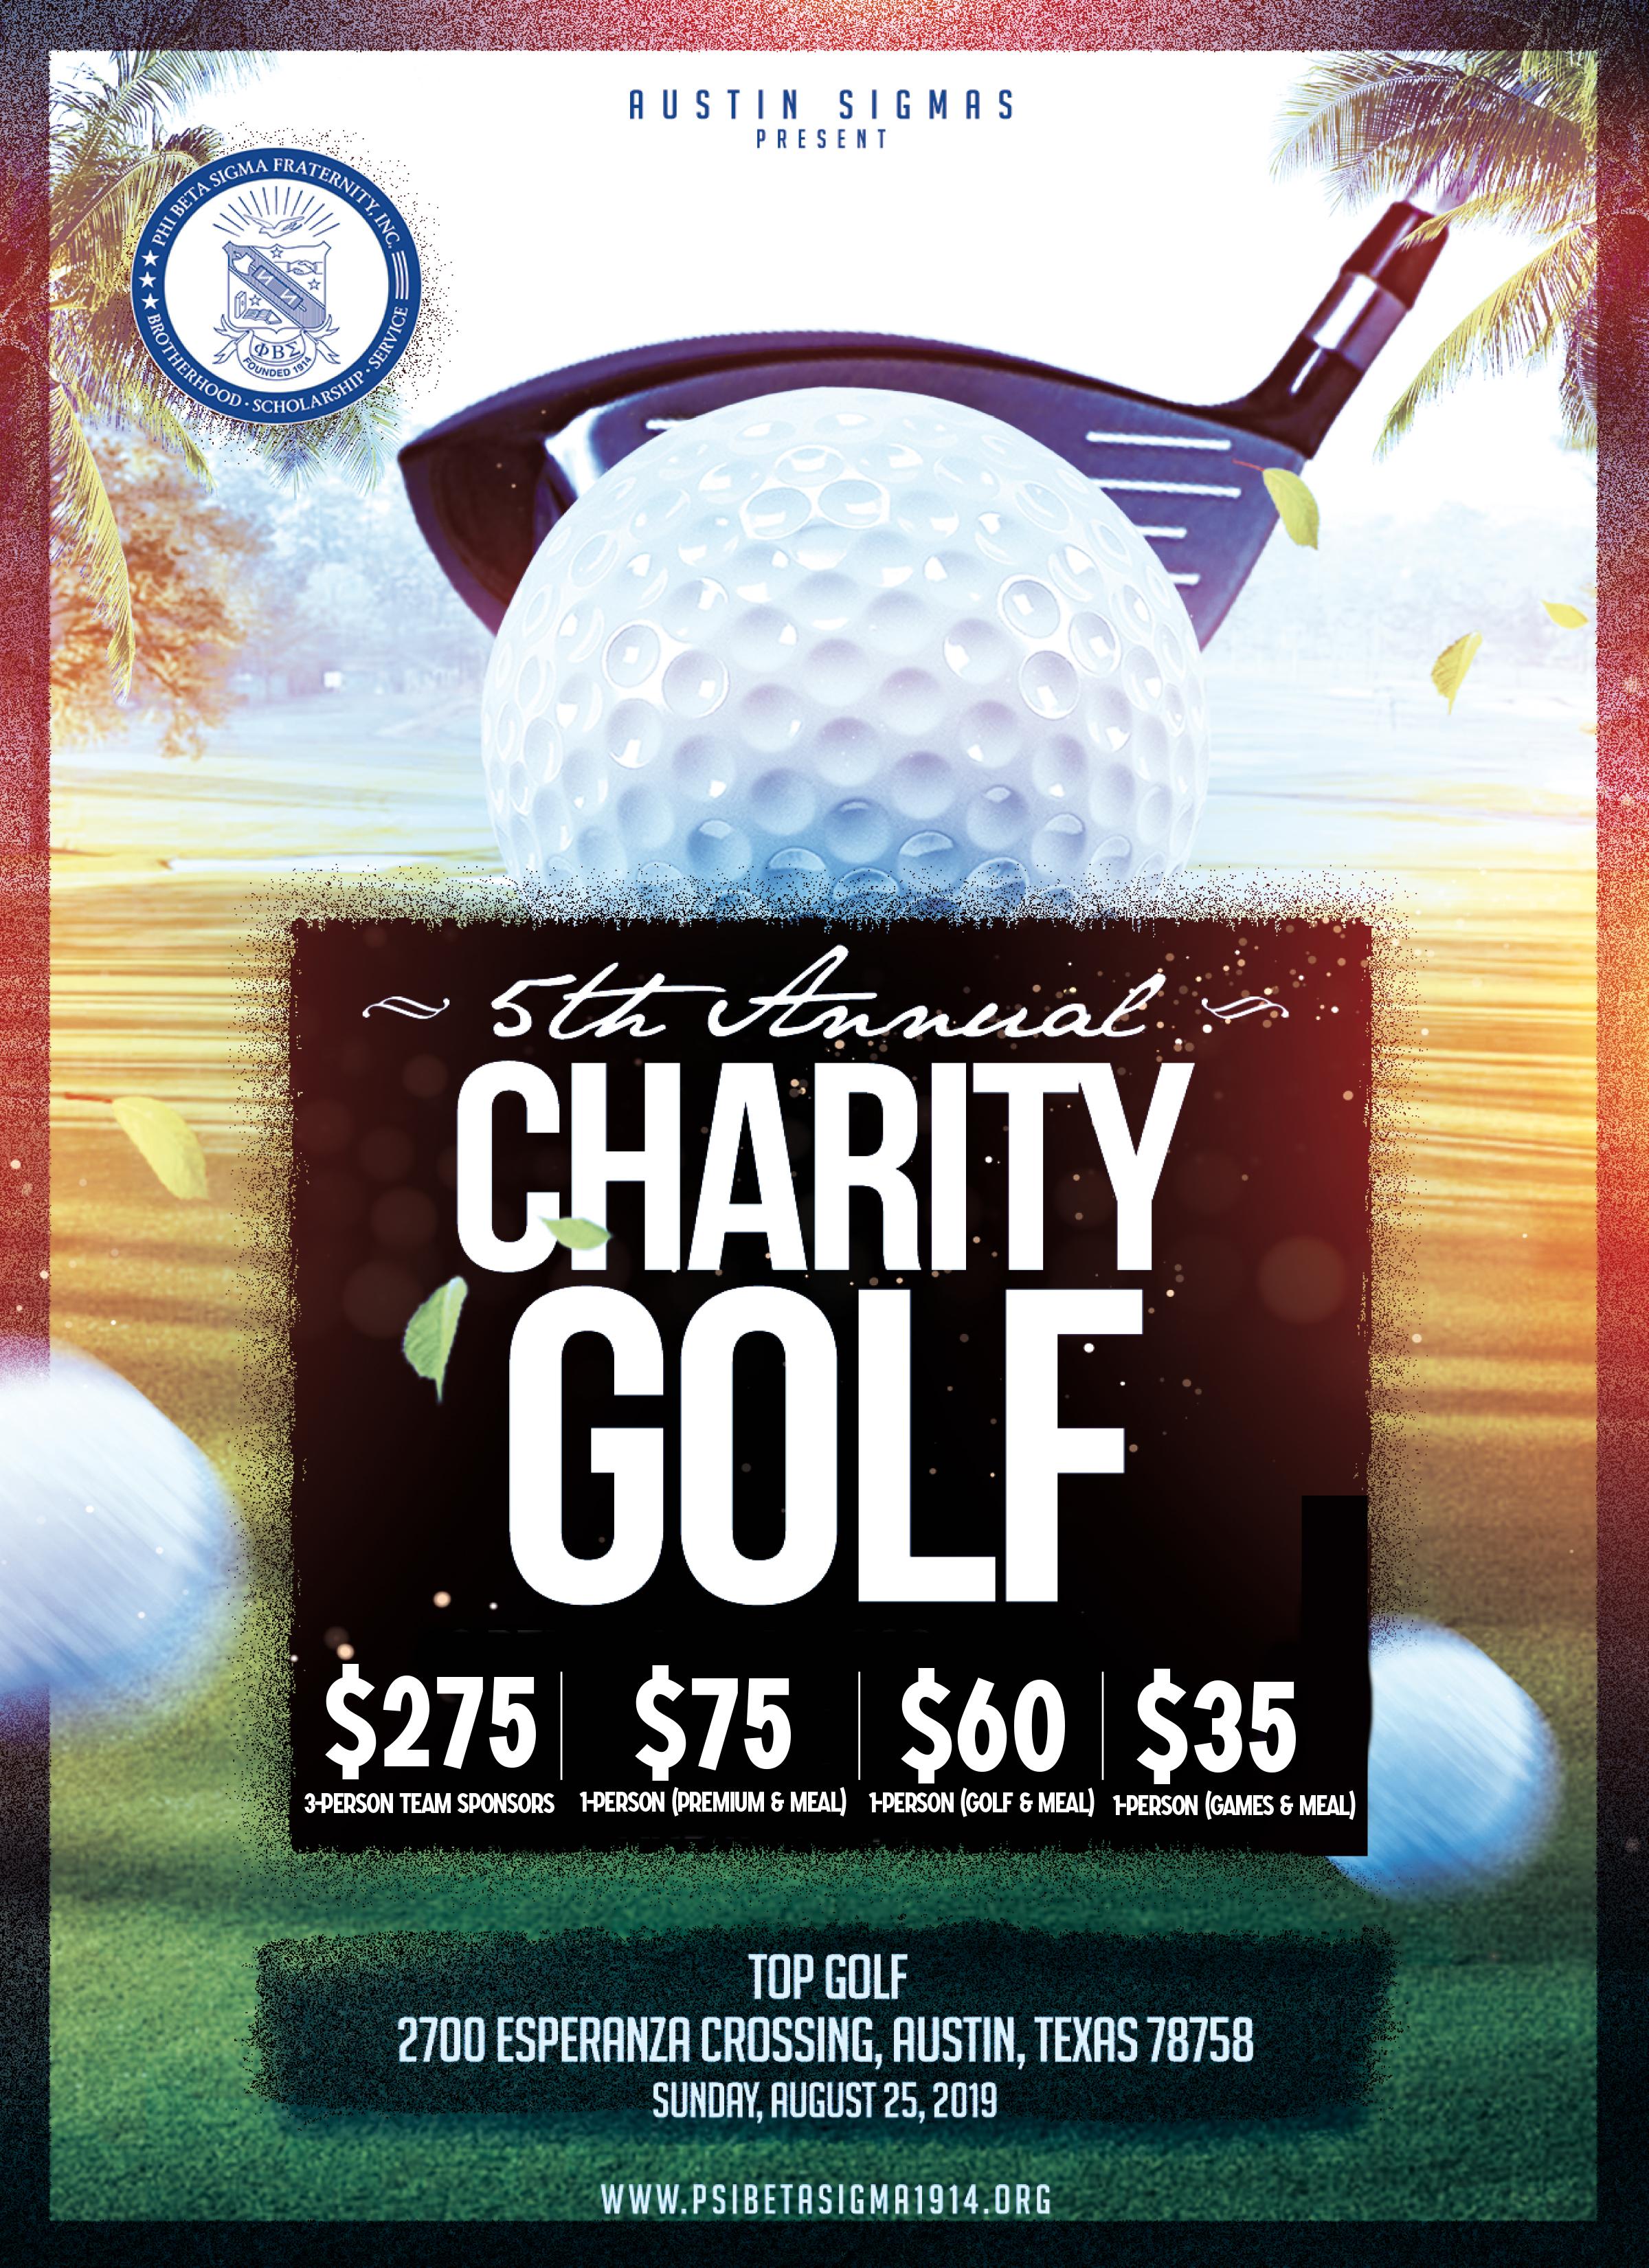 5th Annual Charity Golf tournament